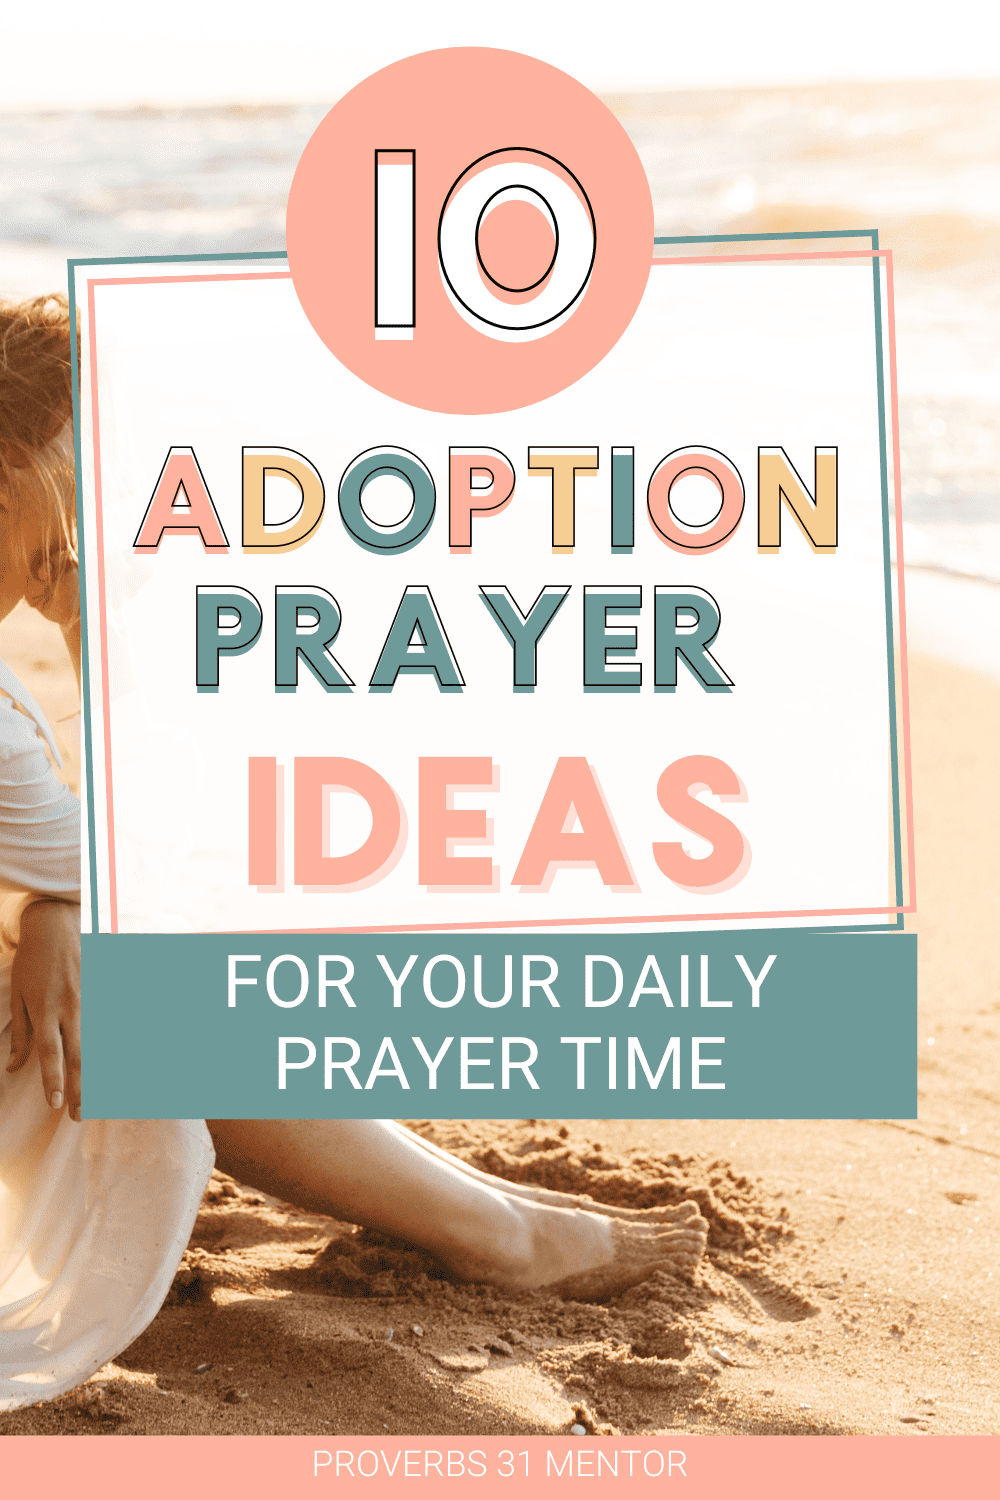 Title- 10 adoption prayers ideas Picture- woman praying on the beach